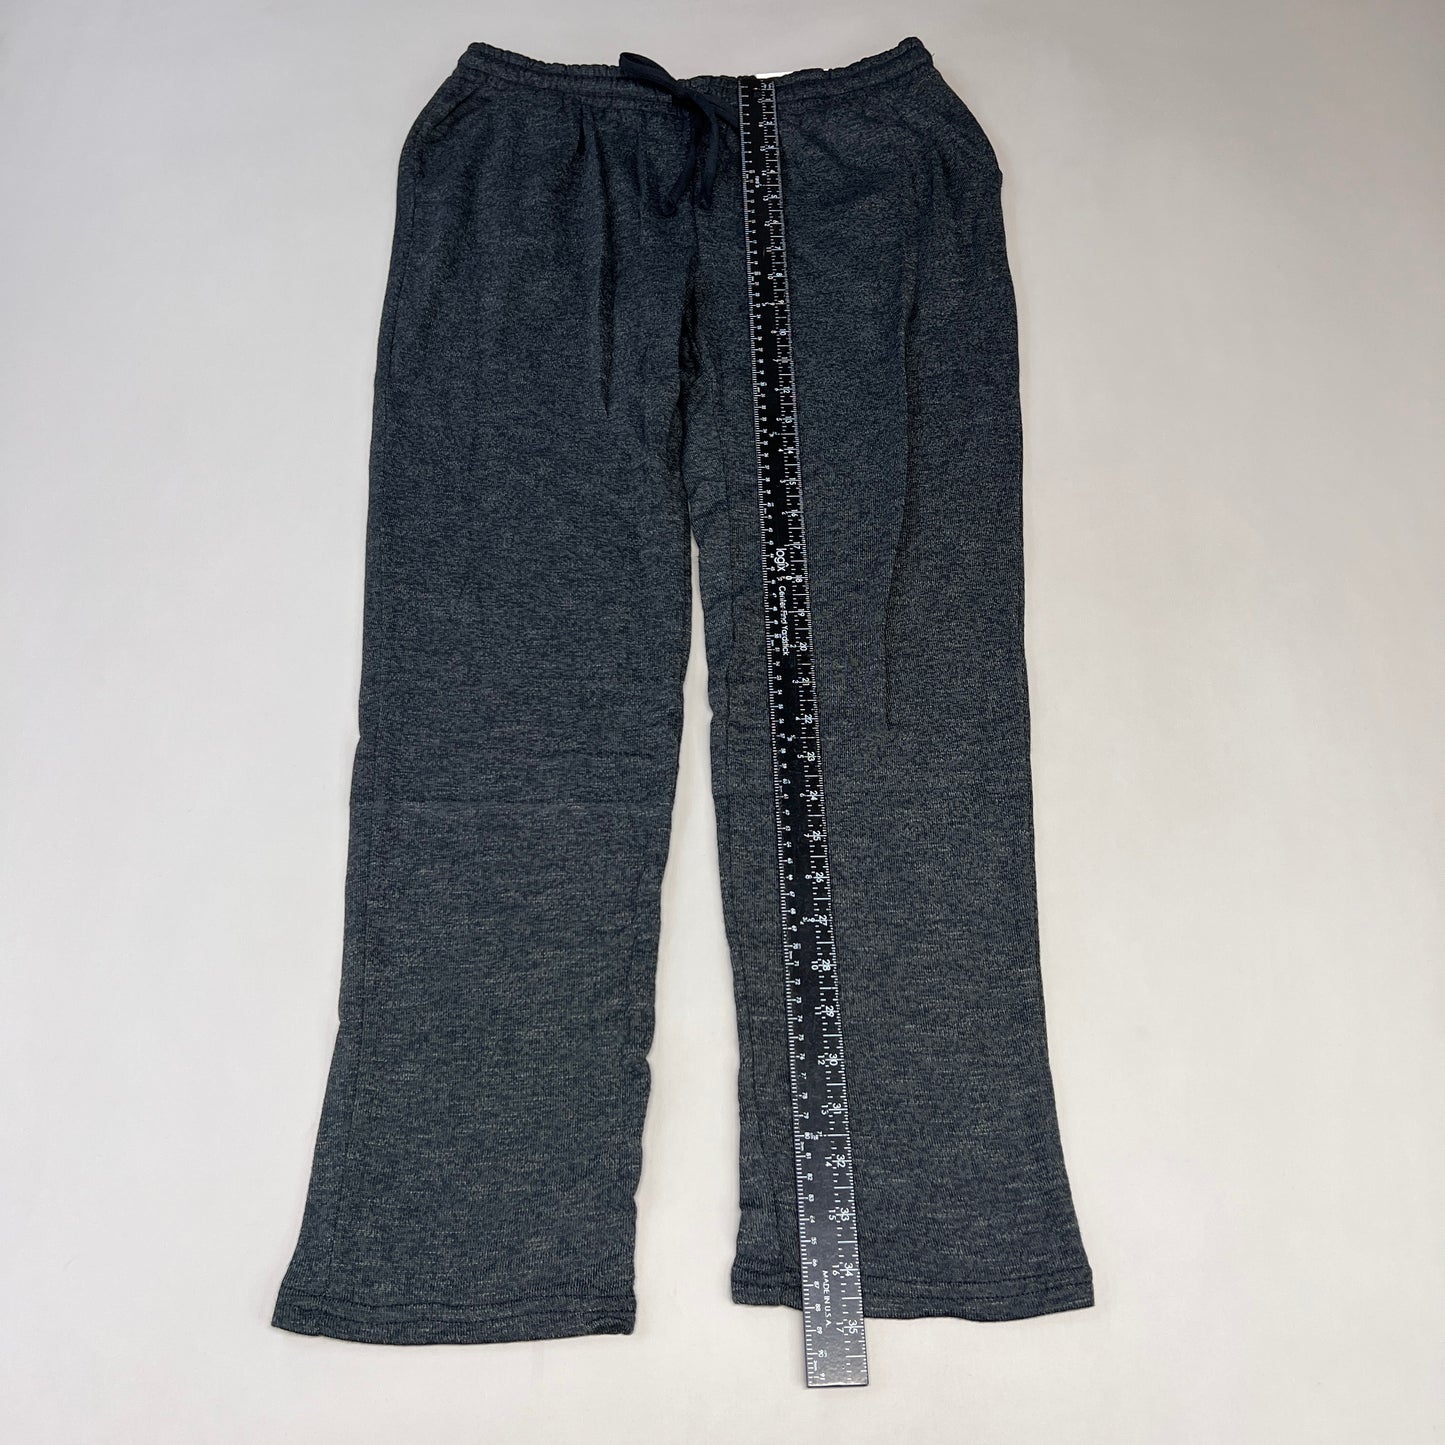 NATORI Soft Stretch Knit Lounge Pant Ankle Length Women's Sz S Heather Black NC7208Y (New)